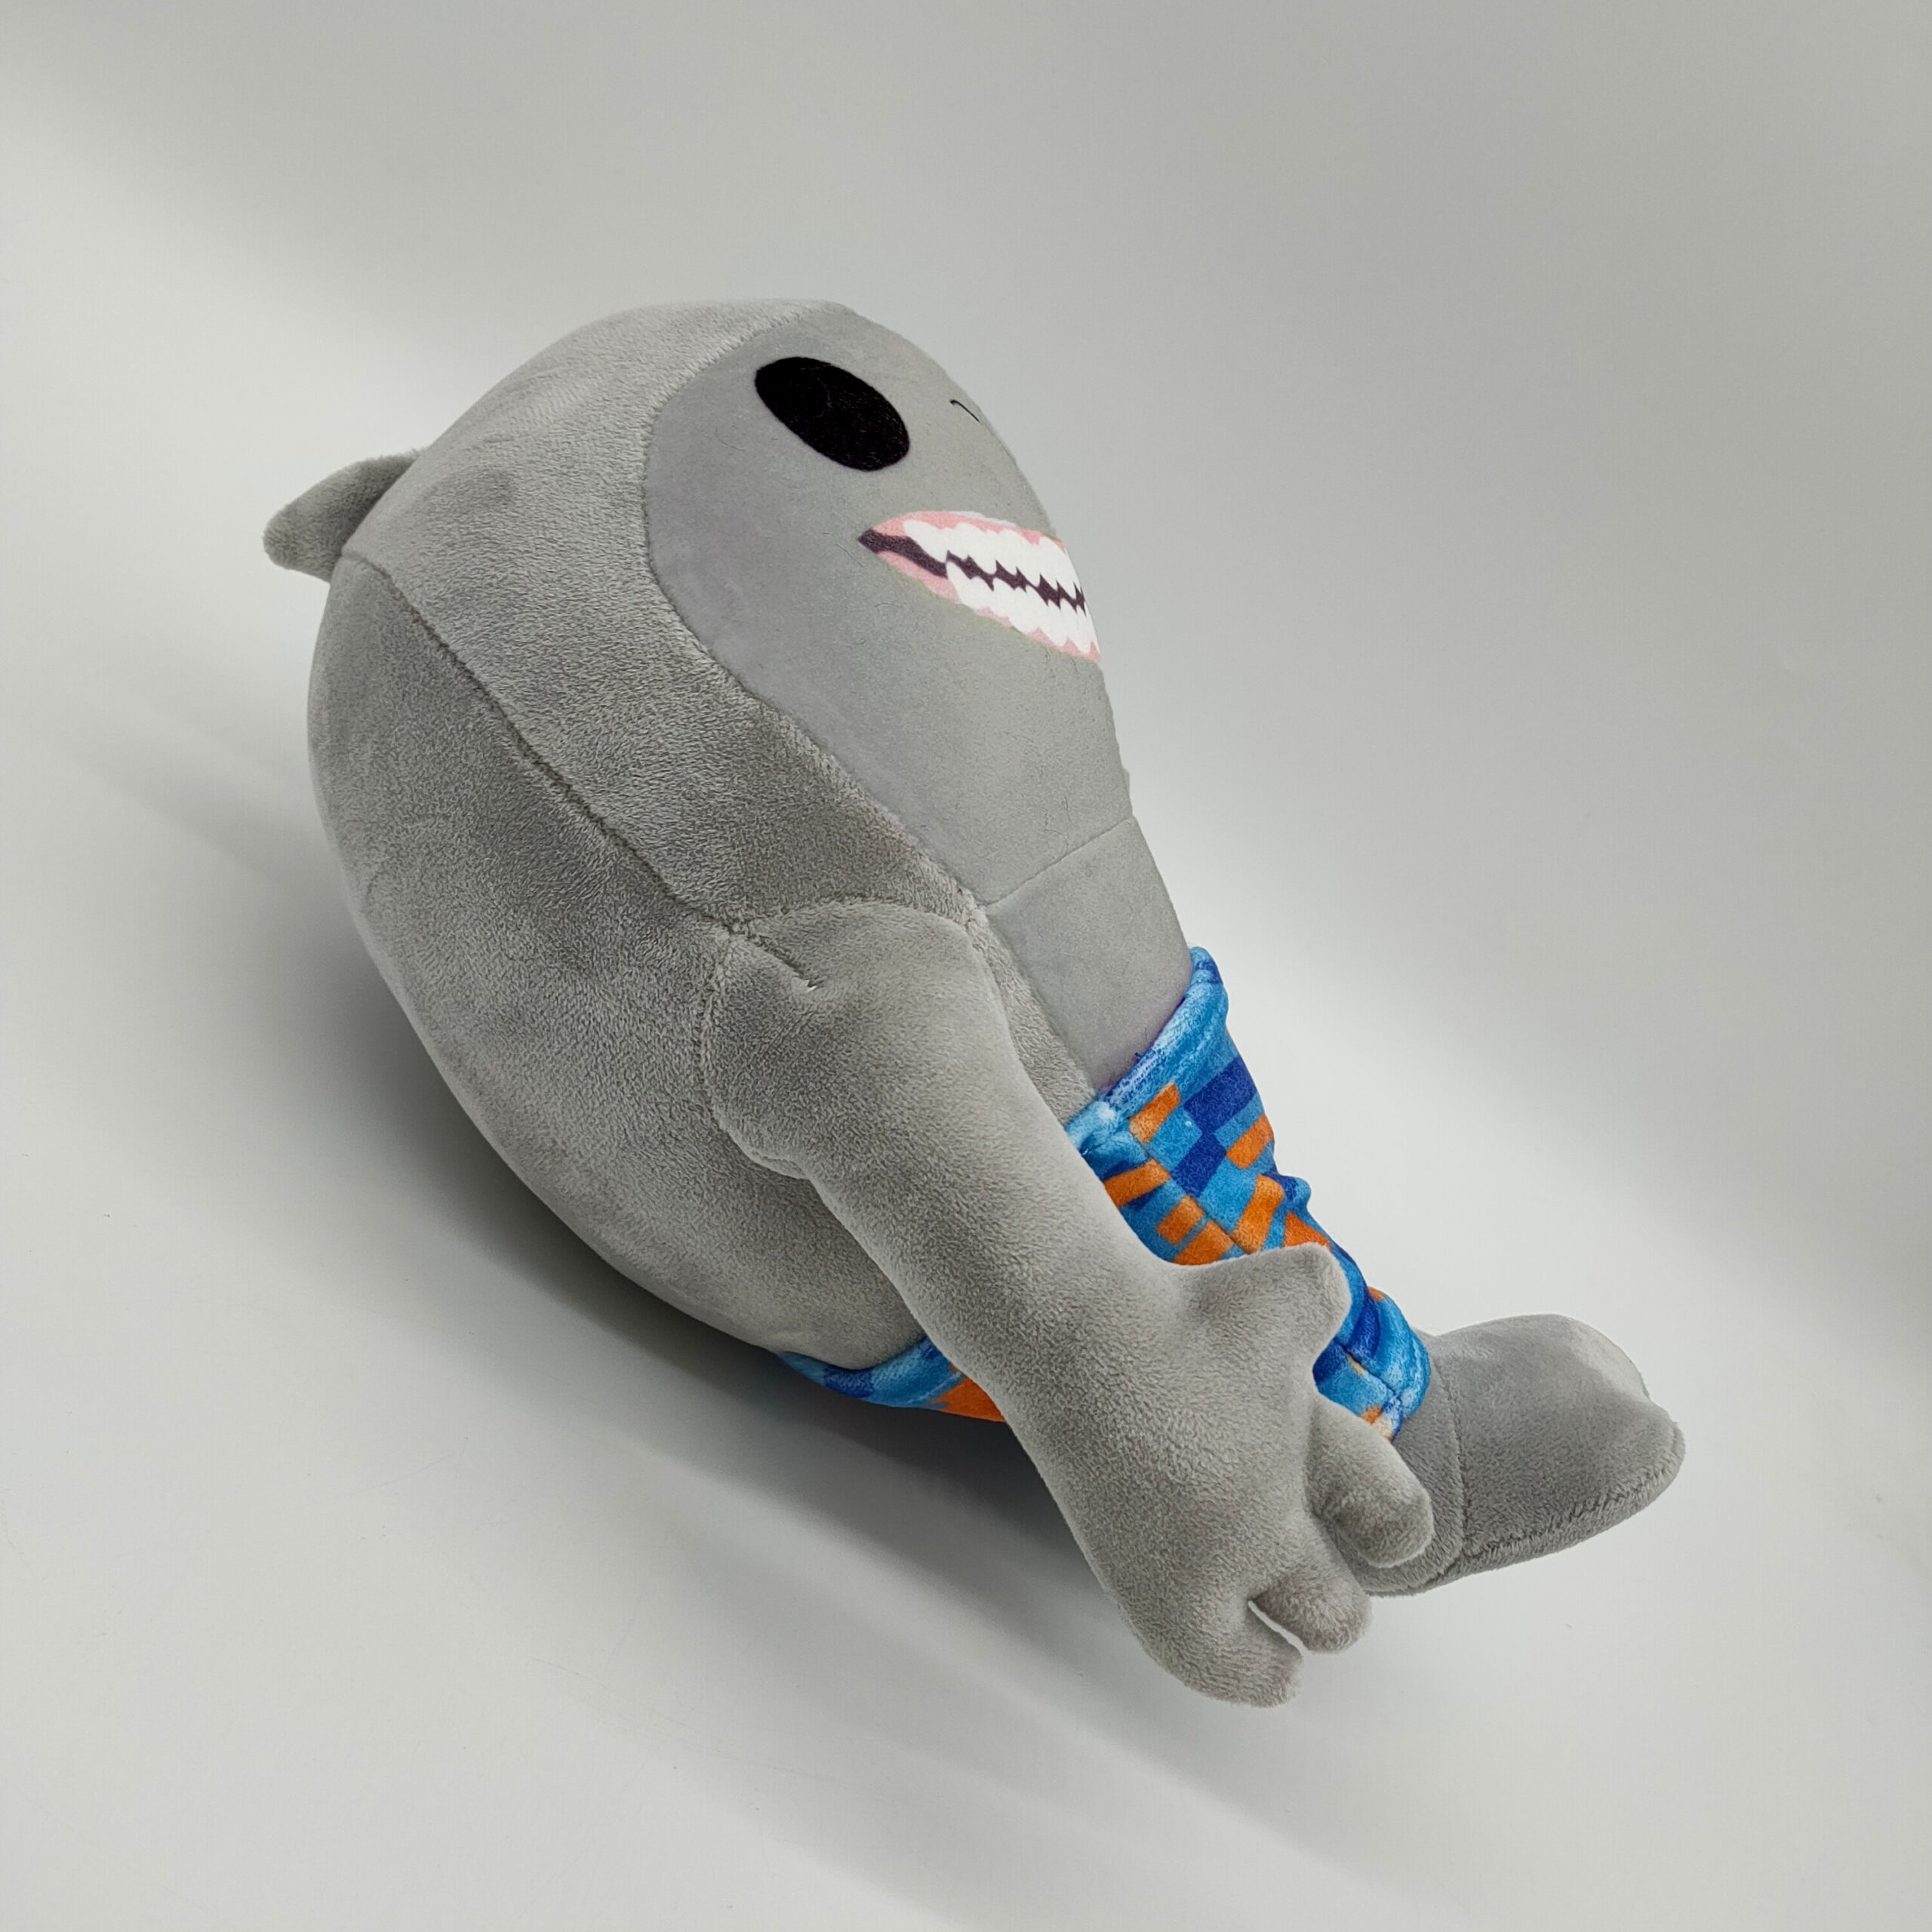 king shark toy plush